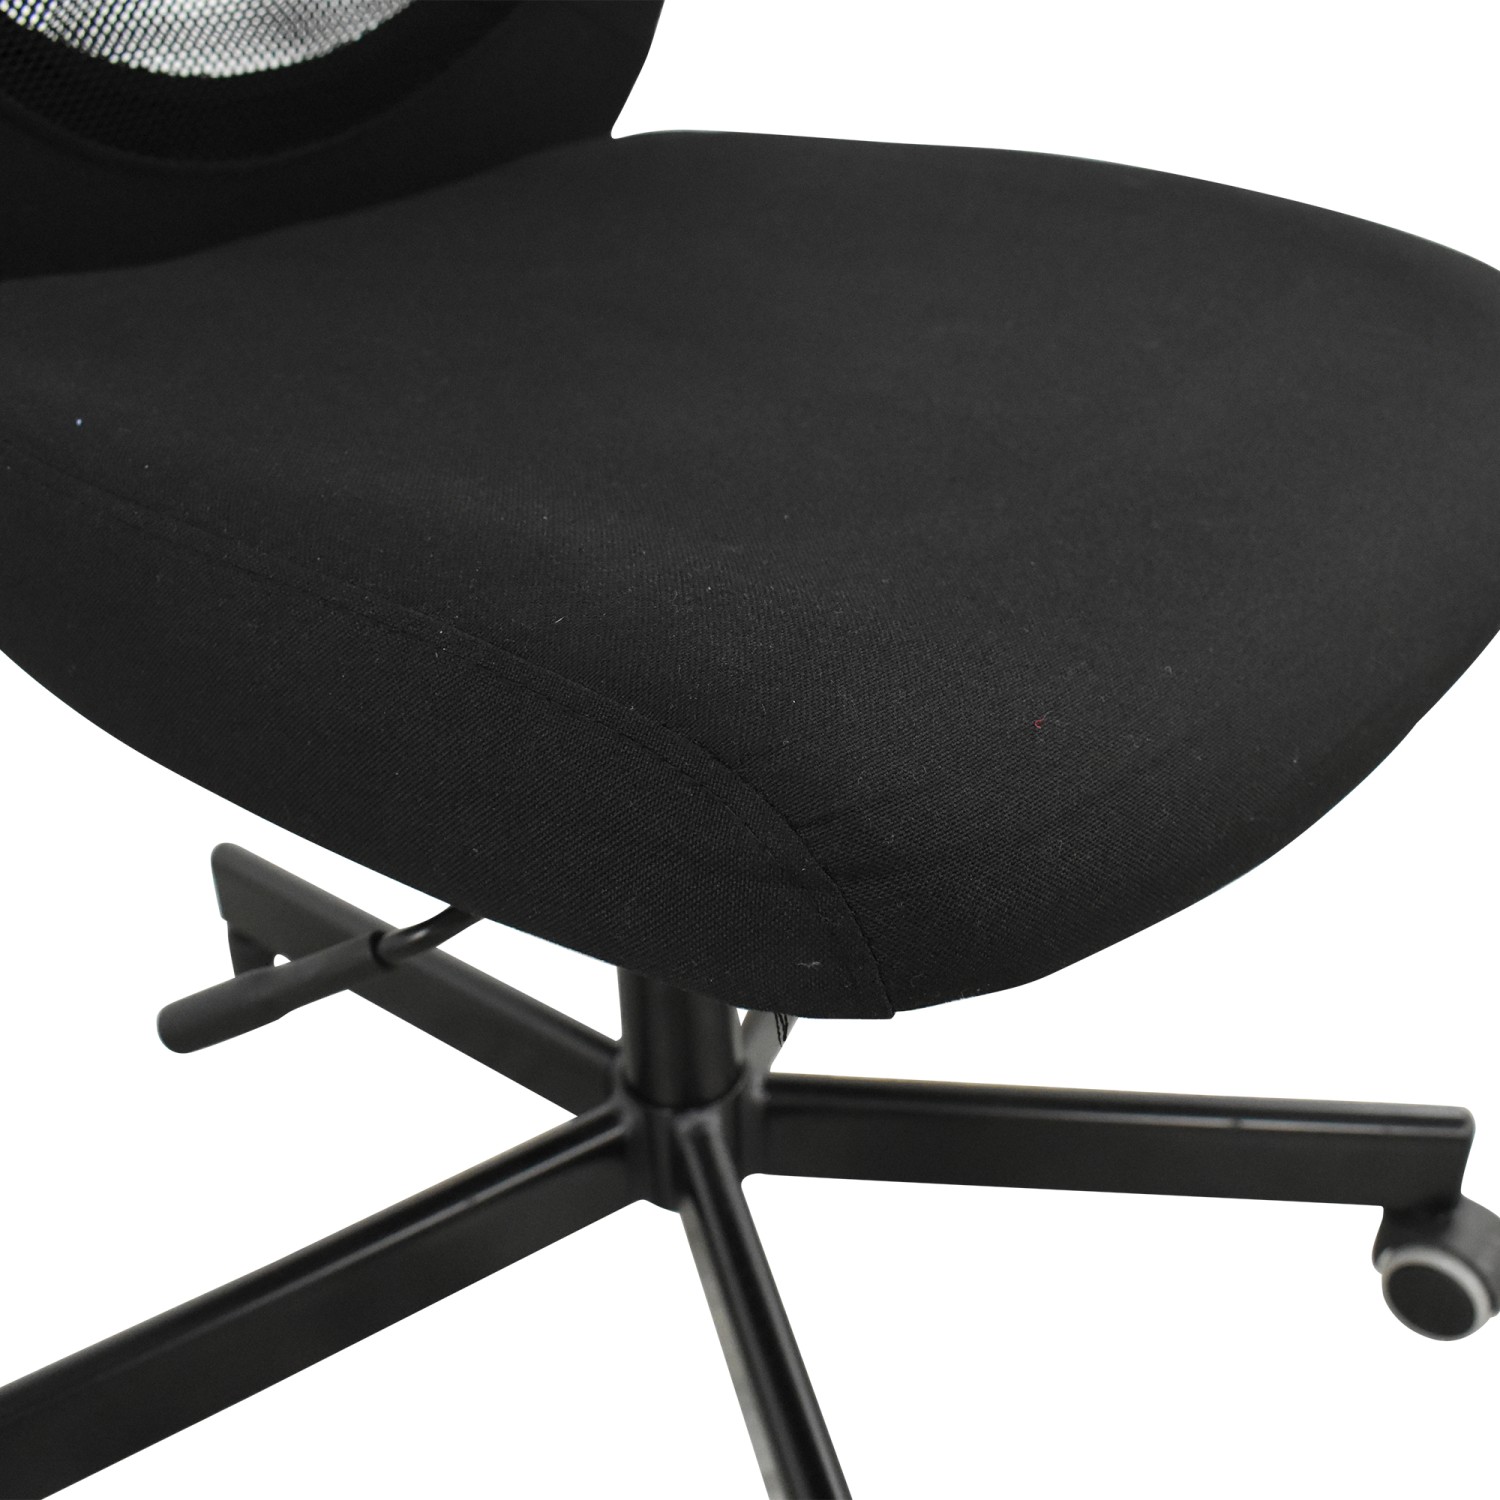 https://res.cloudinary.com/dkqtxtobb/image/upload/f_auto,q_auto:best,w_1500/product-assets/382067/ikea/chairs/home-office-chairs/ikea-flintan-office-chair.jpeg